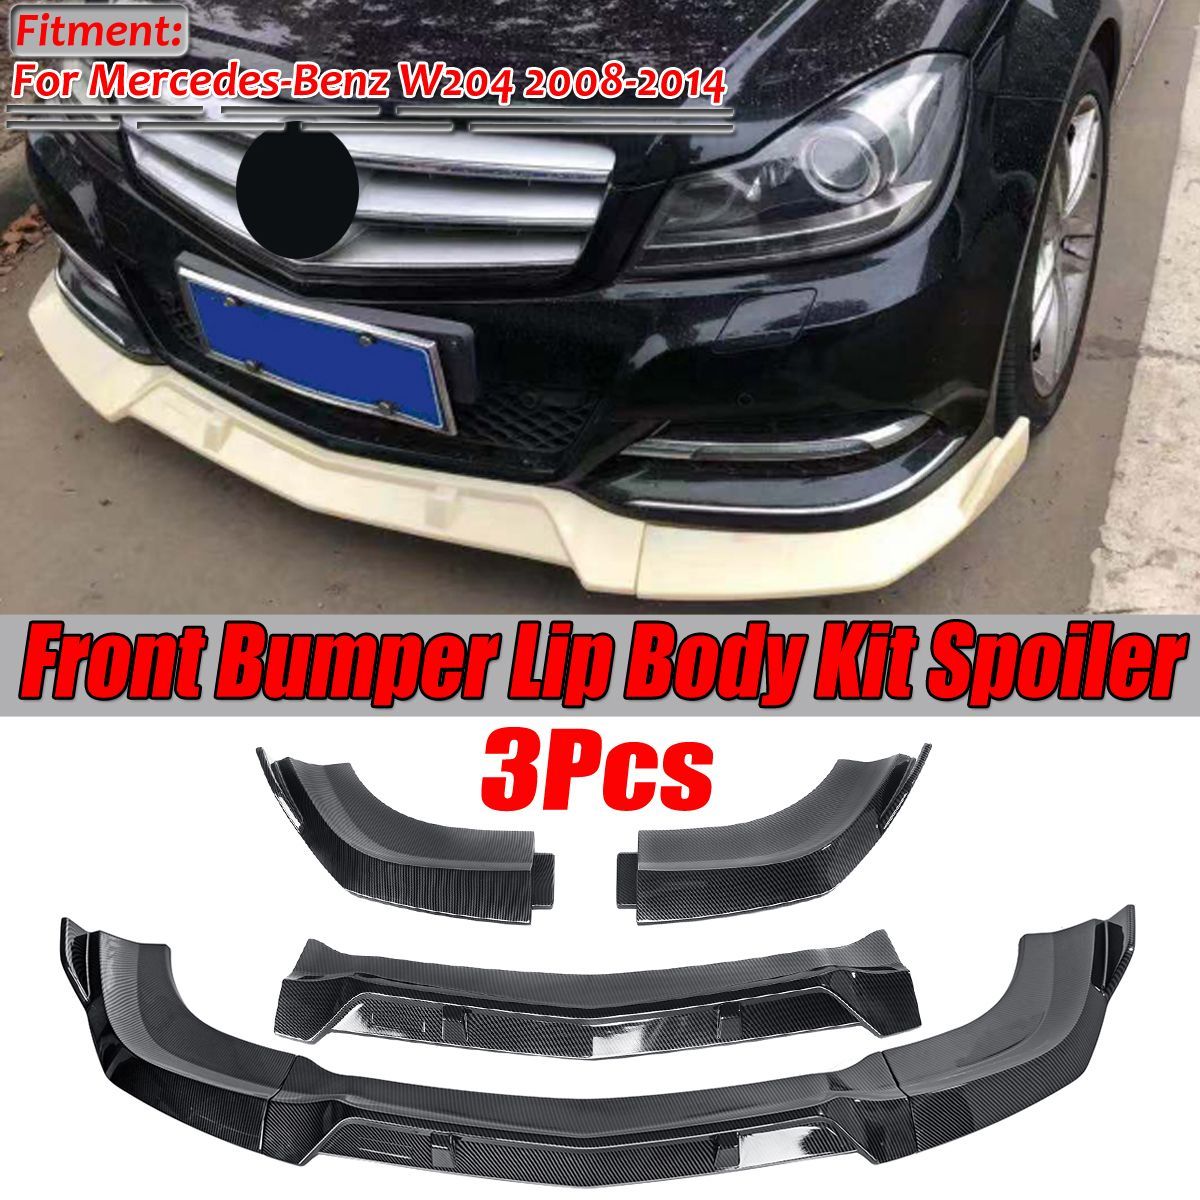 3PCS-Carbon-Fiber-Color-Front-Bumper-Lip-Spoiler-Cover-Trim-For-Mercedes-Benz-W204-2008-2014-1640759